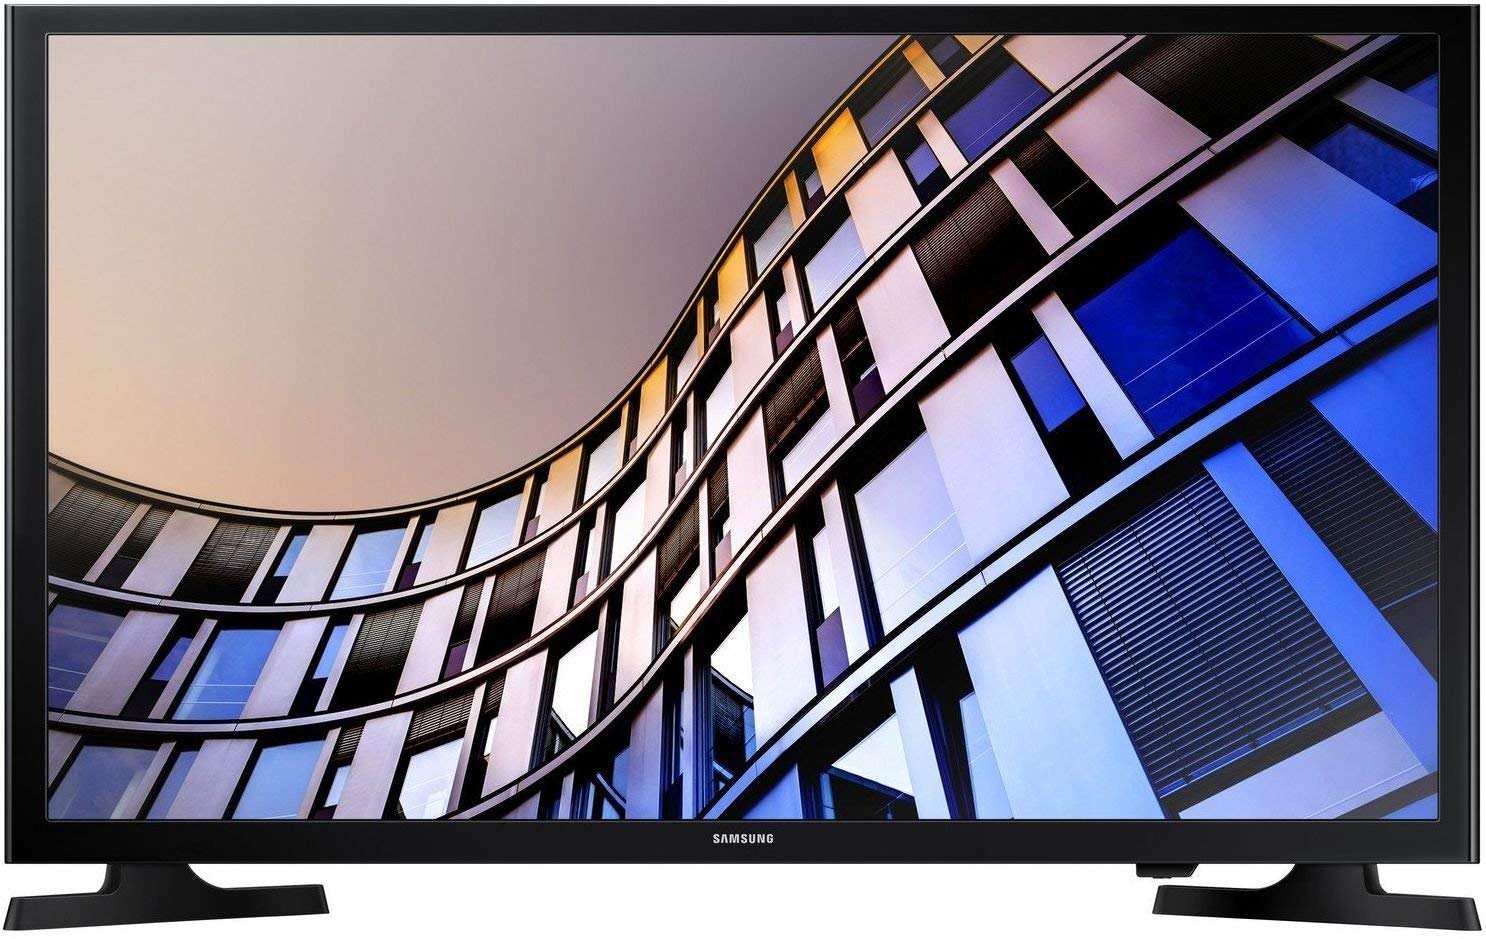 Samsung 32M4300 HD Ready LED Smart TV